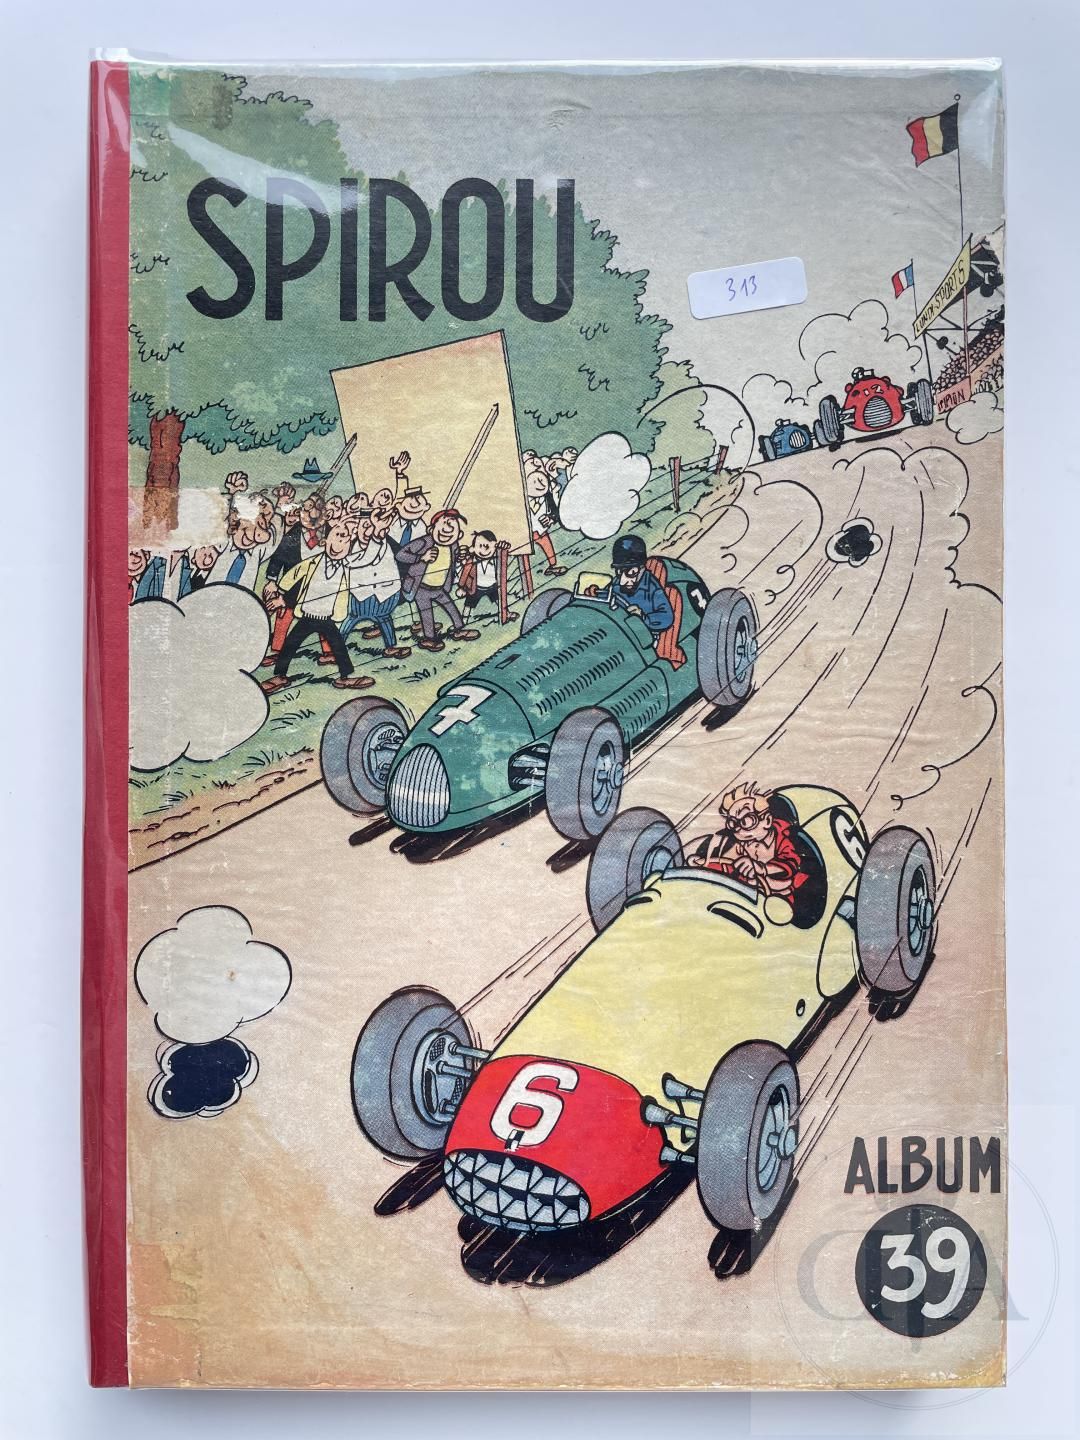 Null Le journal de Spirou/Reliure editeur n°39 de 1951. Completo en buen estado.&hellip;